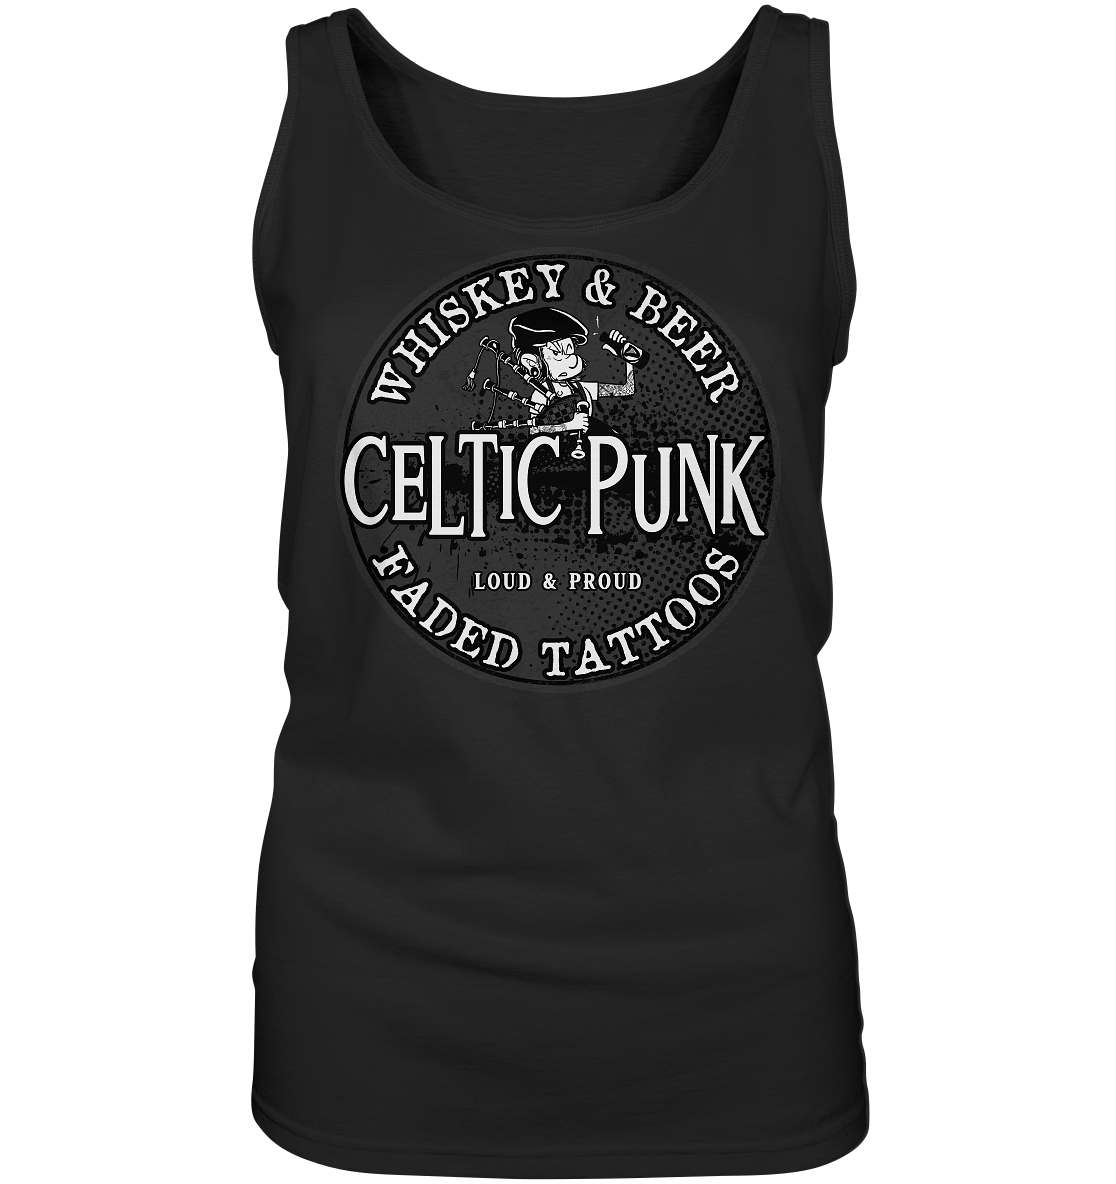 Celtic Punk "Whiskey, Beer & Faded Tattoos" - Ladies Tank-Top